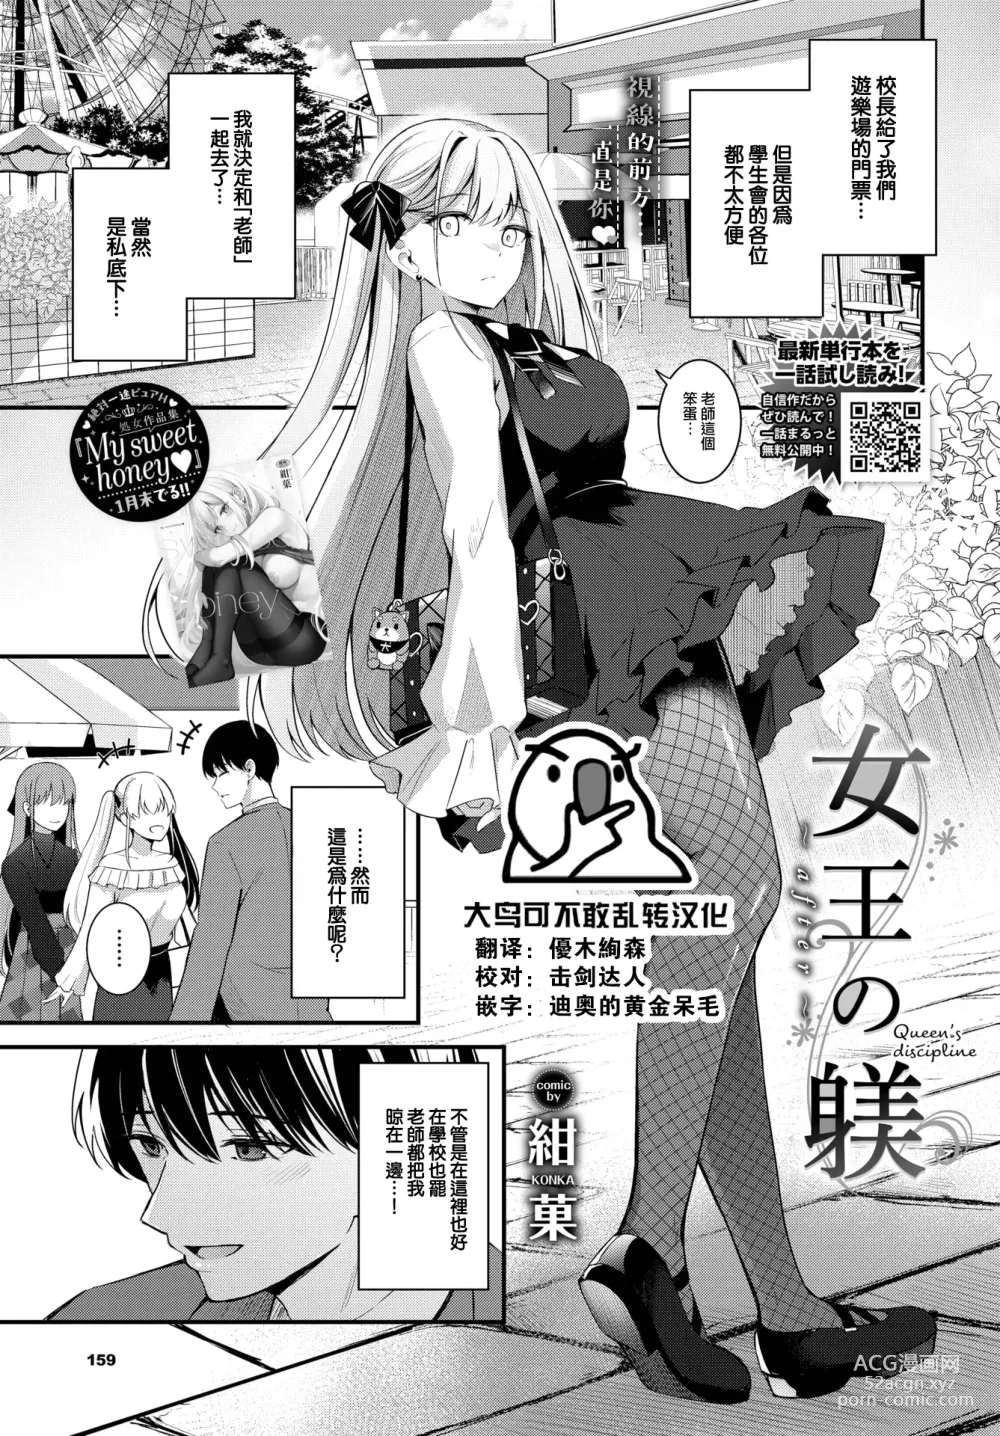 Page 1 of manga Joou no Shitsuke - Queens discipline ~after~